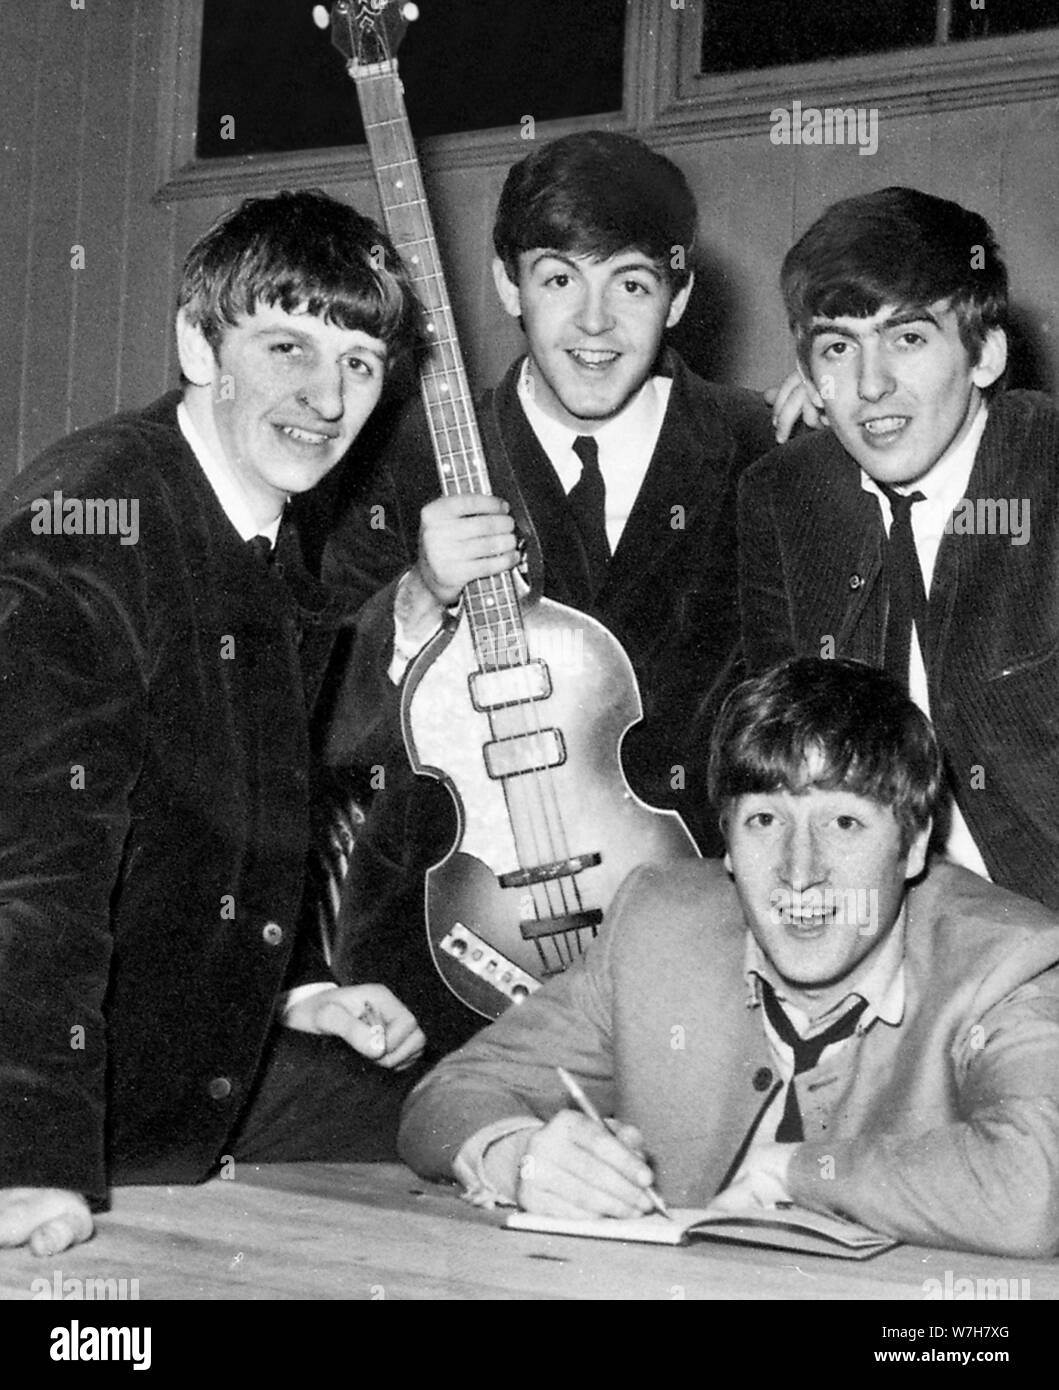 The Beatles backstage in 1962 Ringo Starr, Paul McCartney, George Harrison and John Lennon. The Beatles 1960s 'The Beatles' "The Beatles" Stock Photo